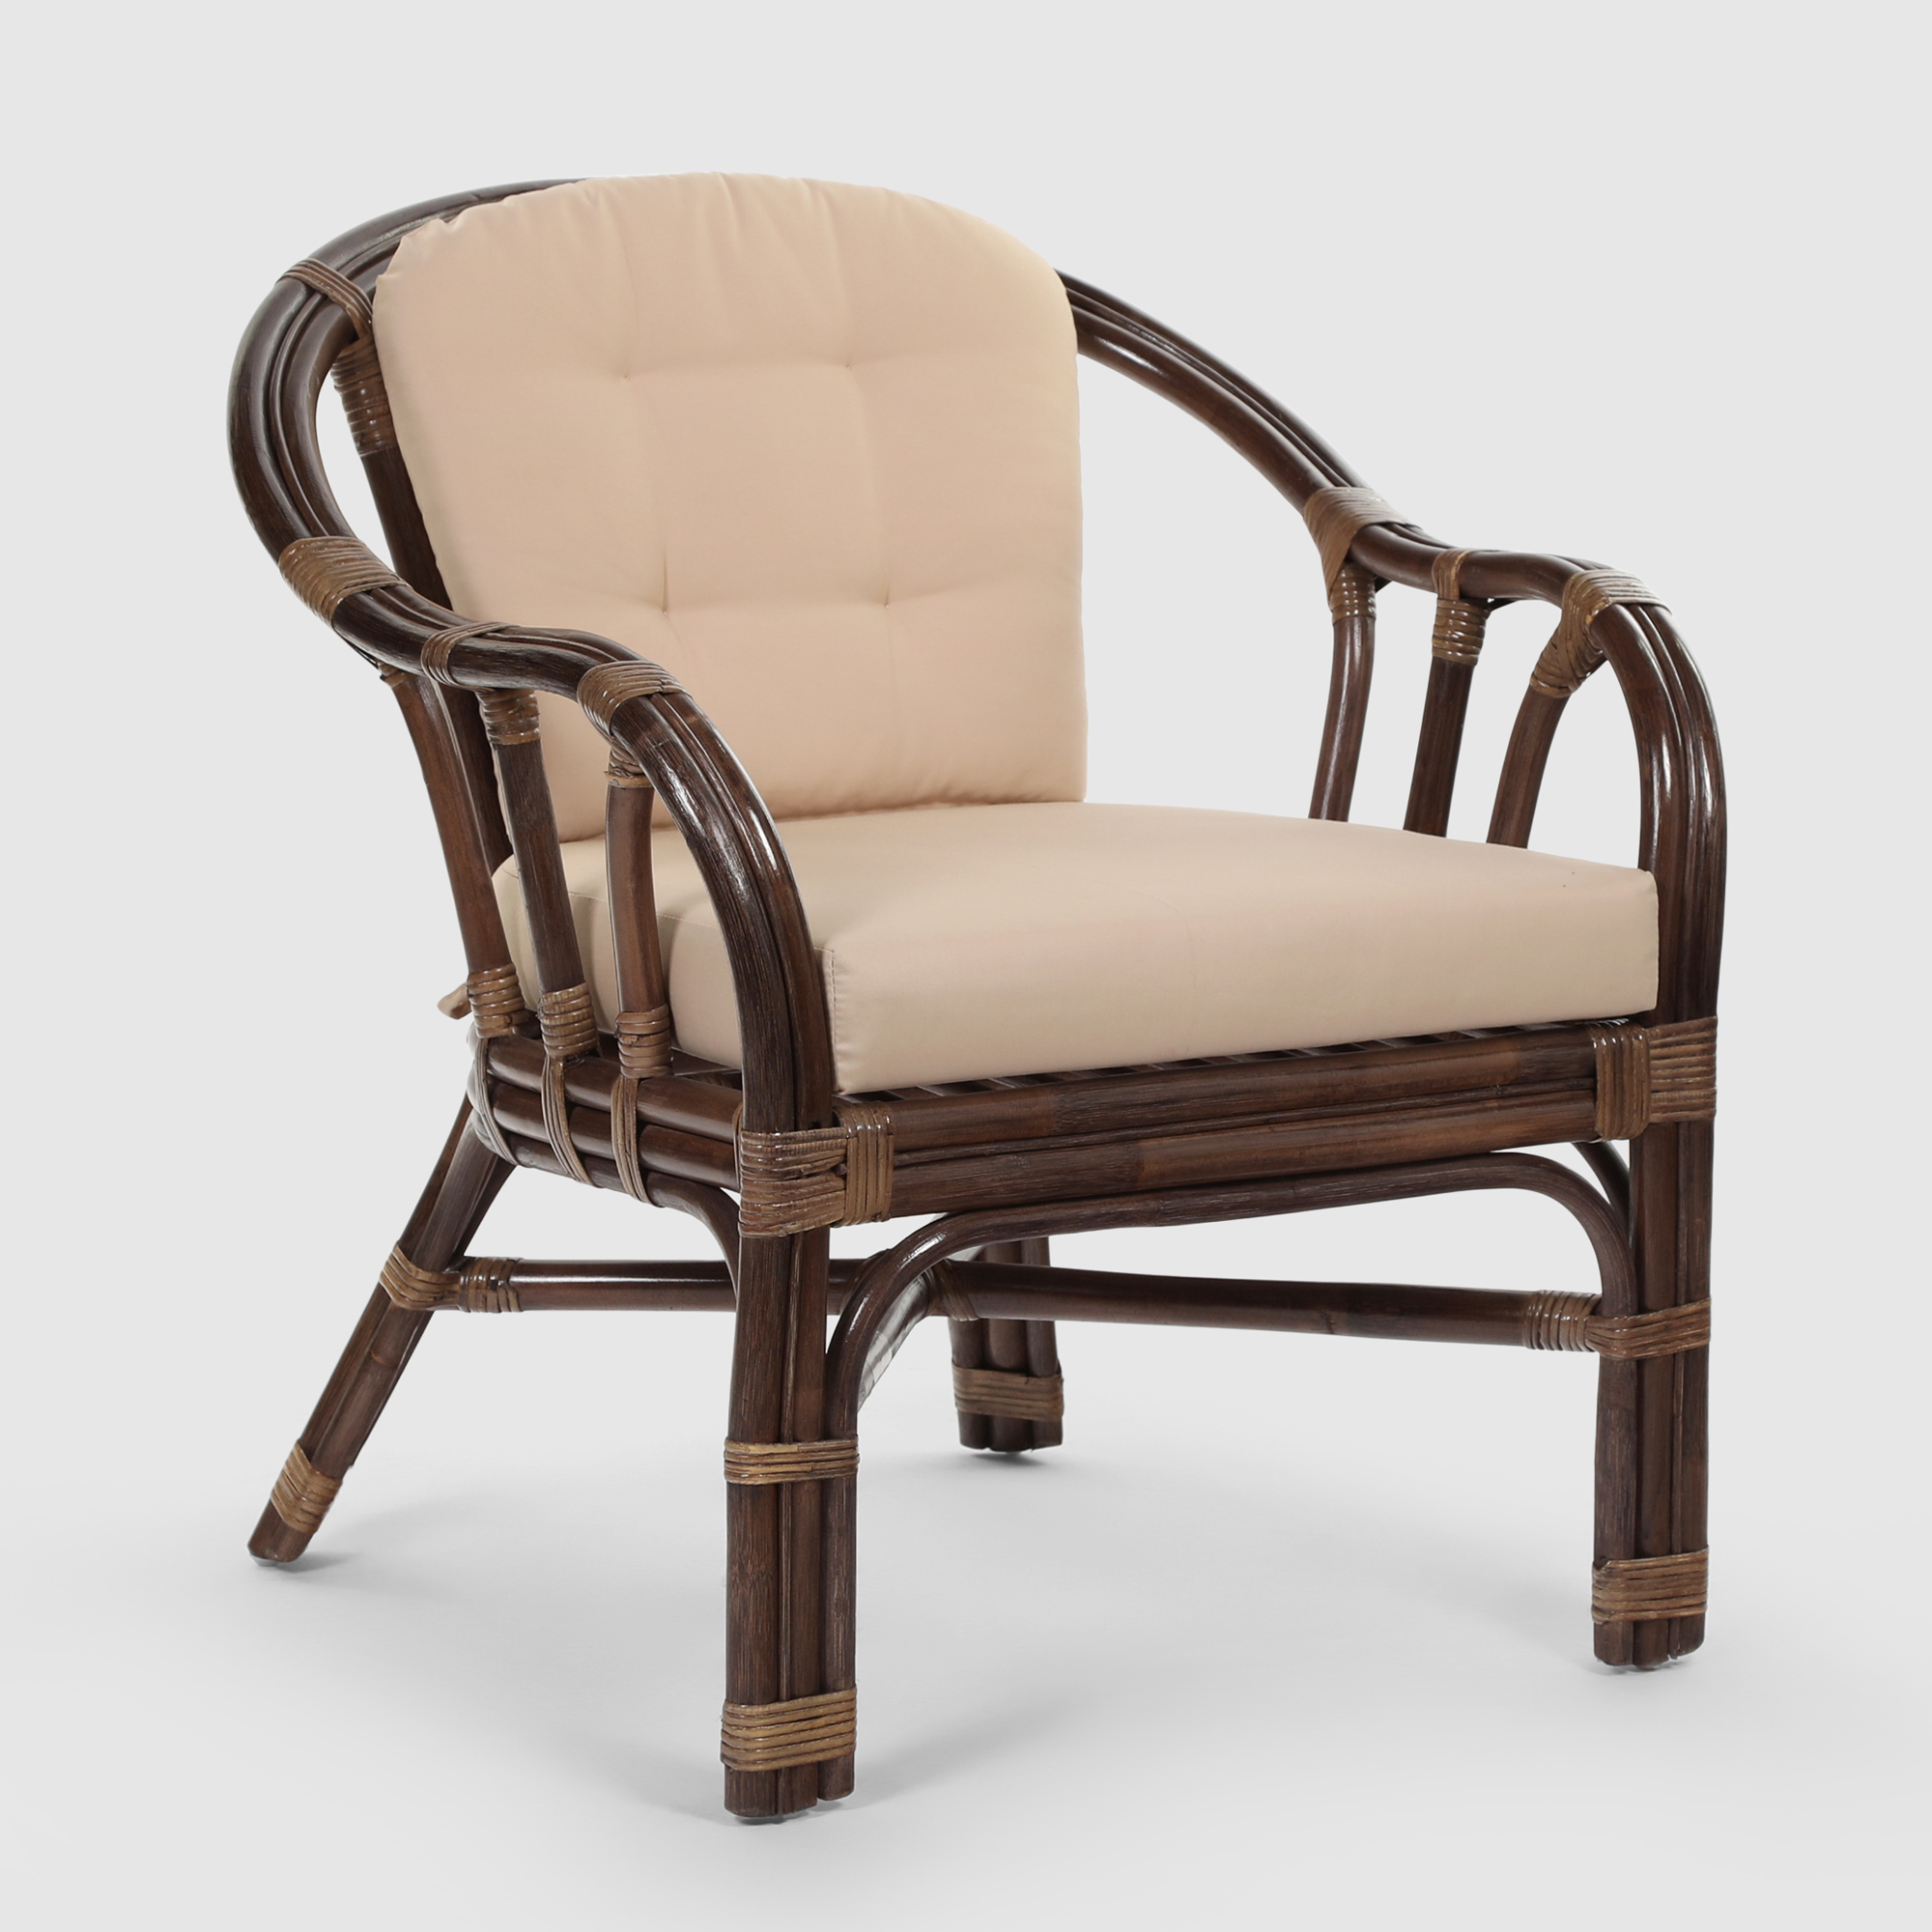 Комплект мебели Rattan grand San Marino medium brown 3 предмета, цвет коричневый, размер 60х67х70 см - фото 3